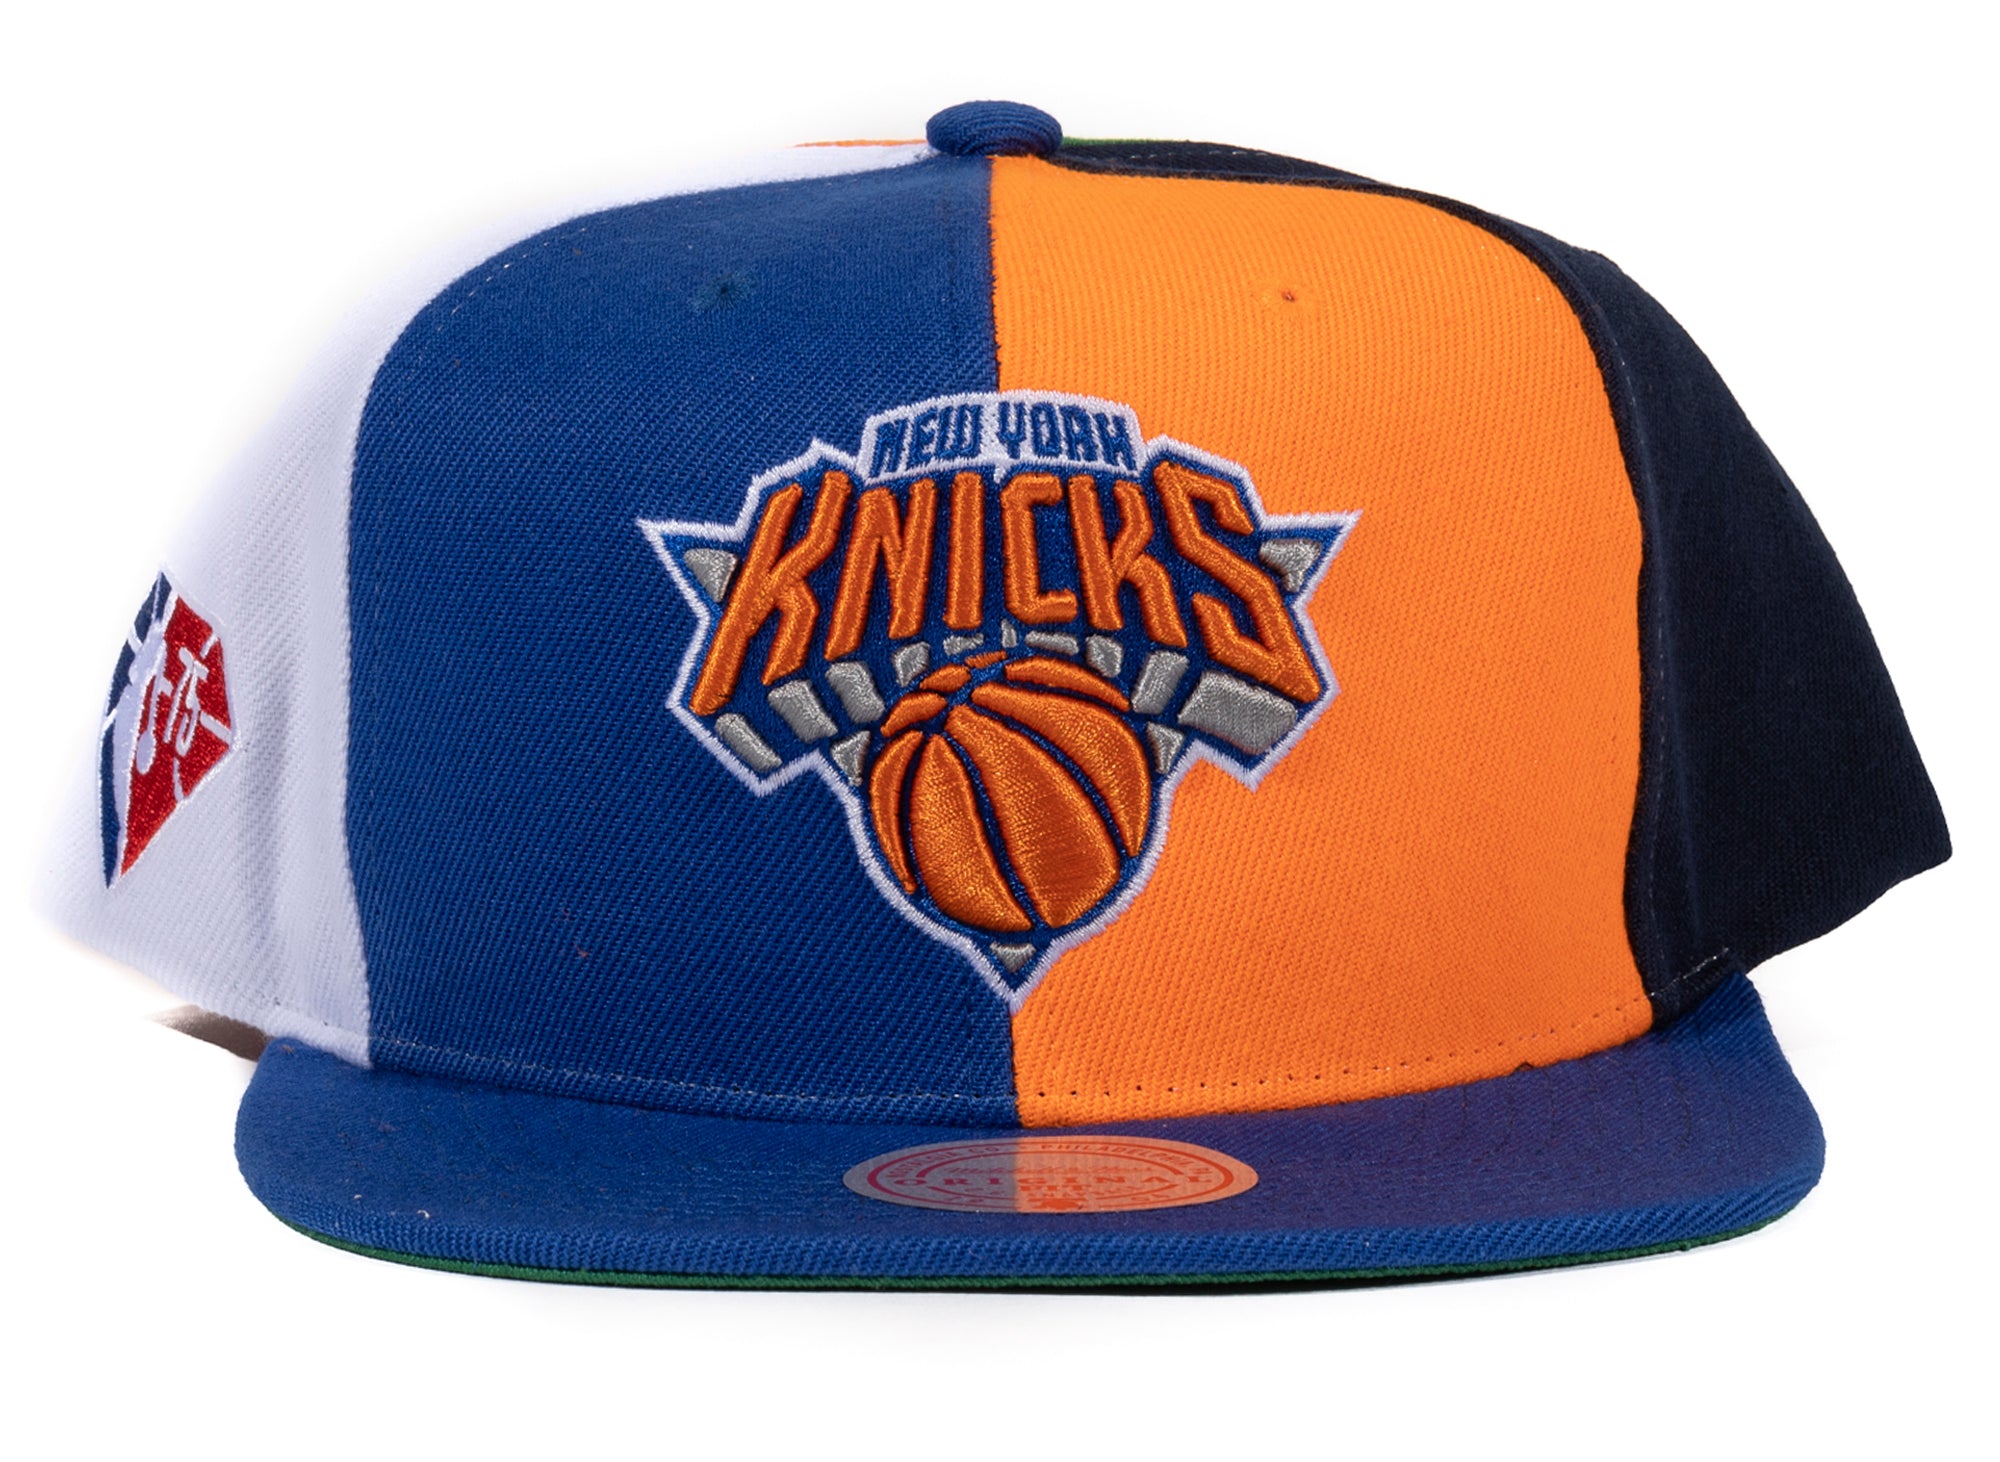 Wu-Tang Wu York Knicks Mitchell & Ness Snapback Hat New York Knicks